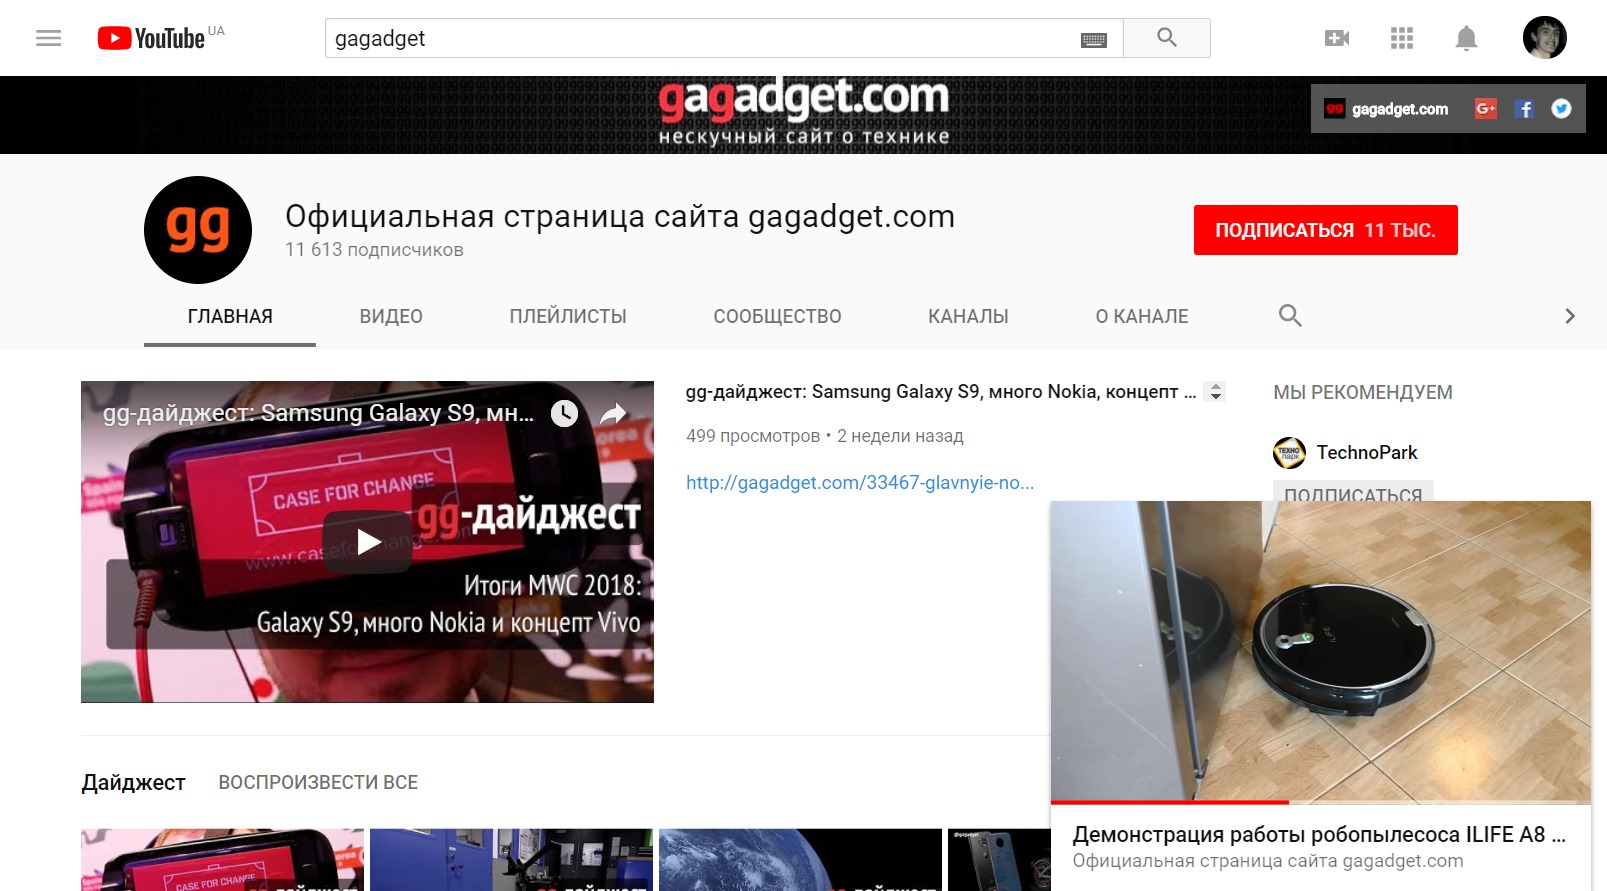 gagadget-youtube-window.jpg